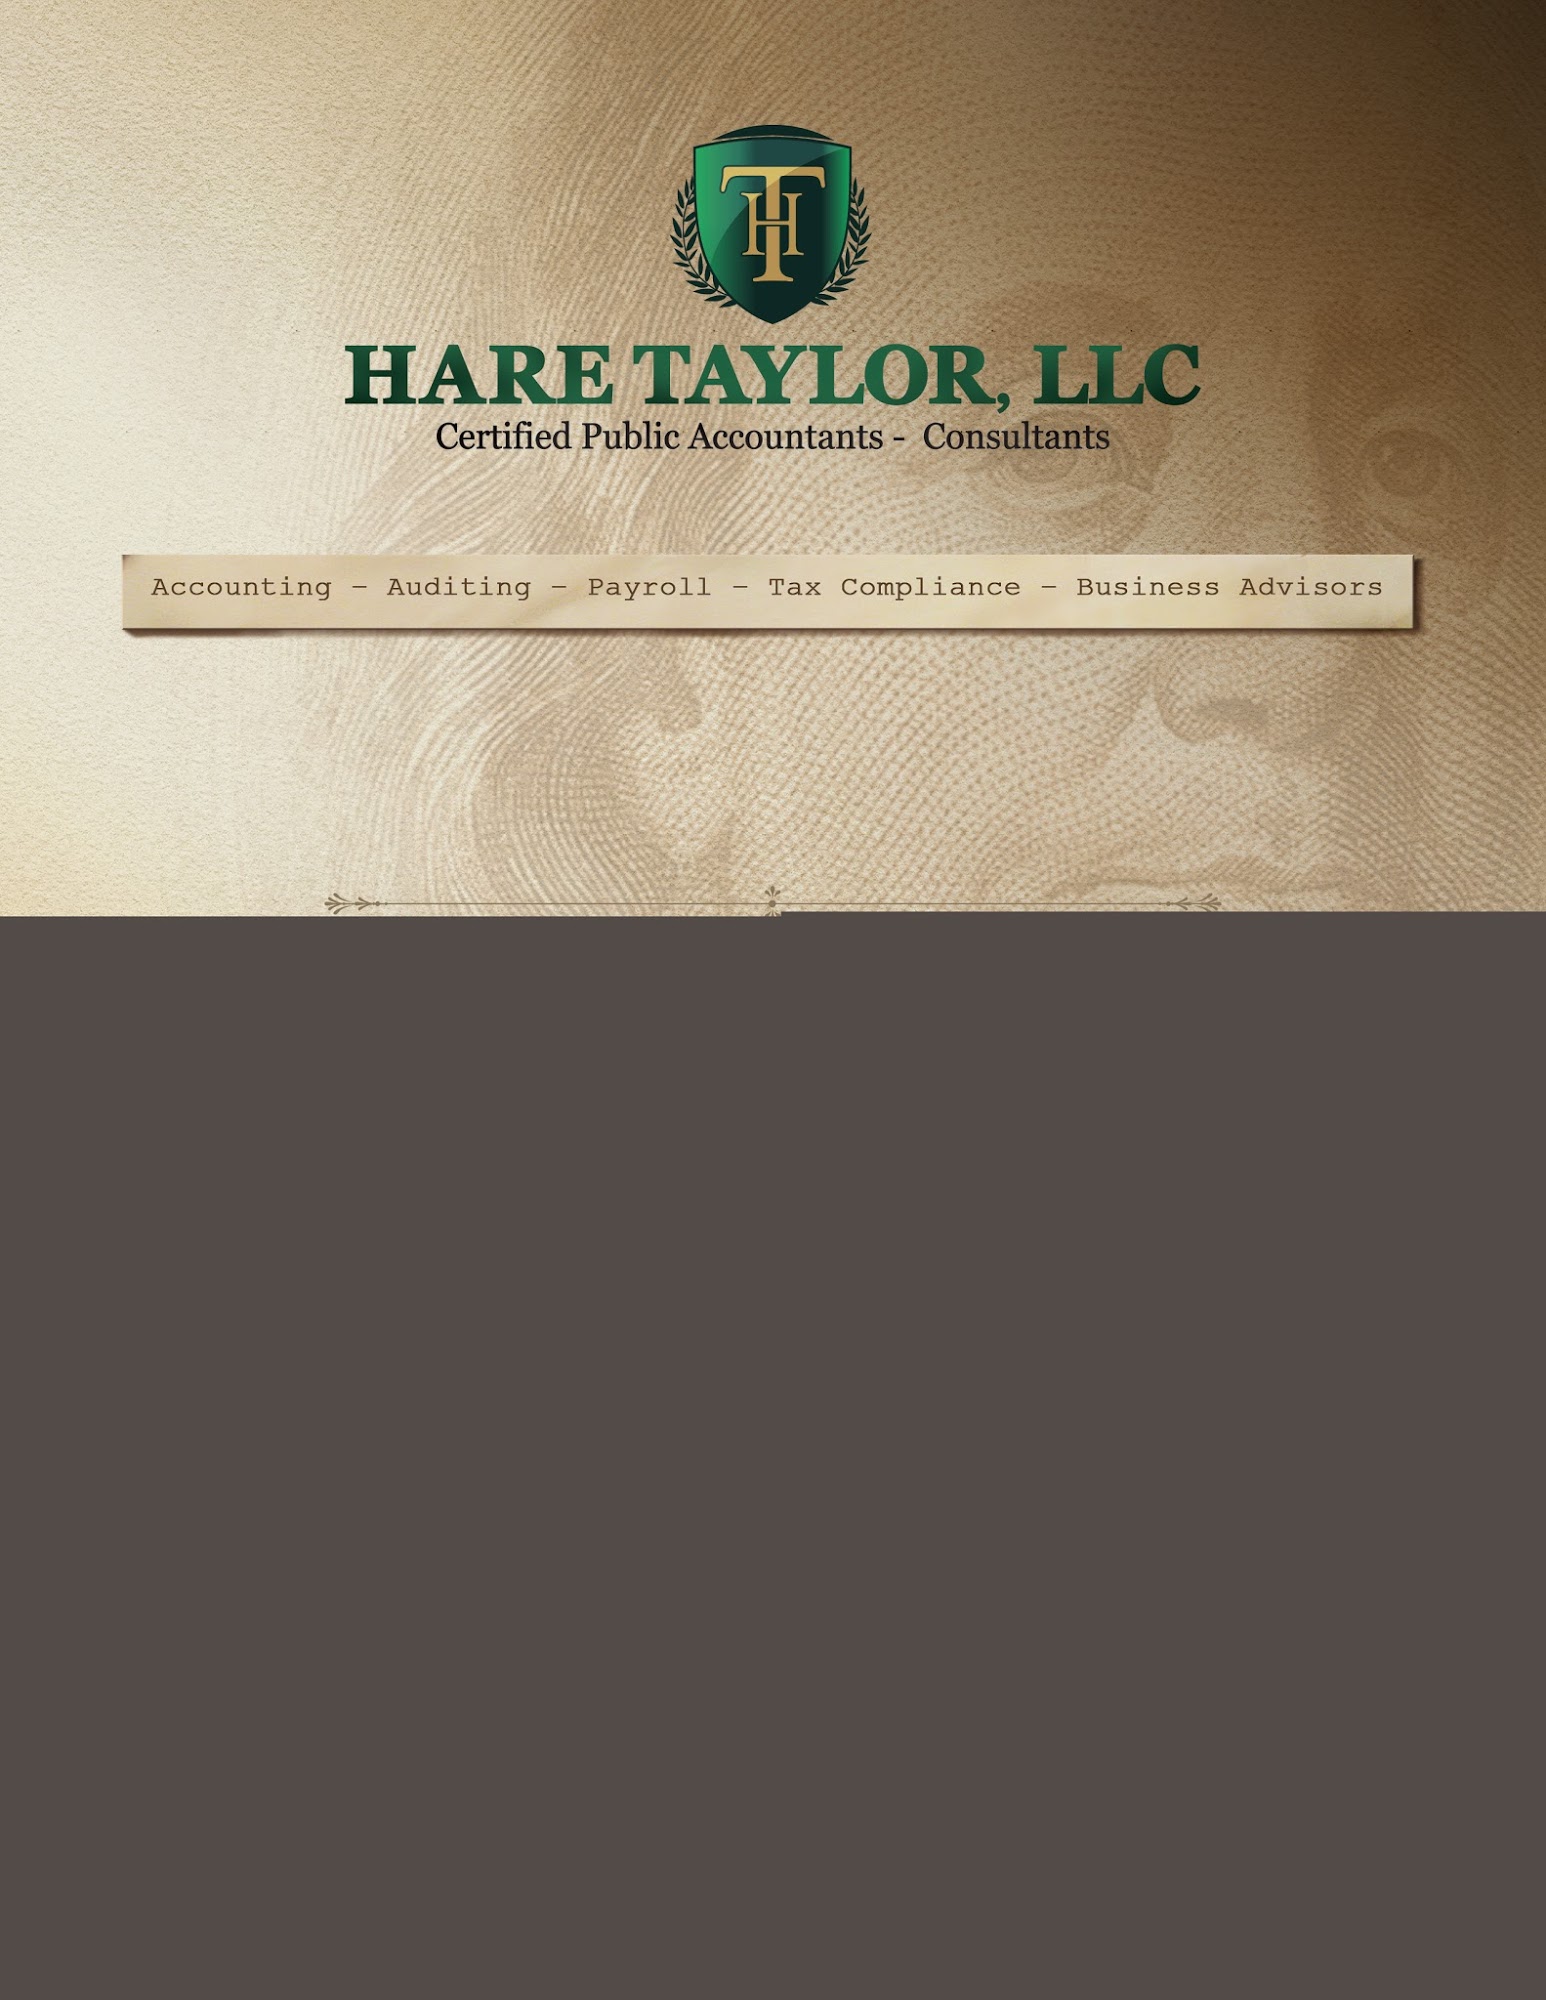 Hare Taylor, LLC